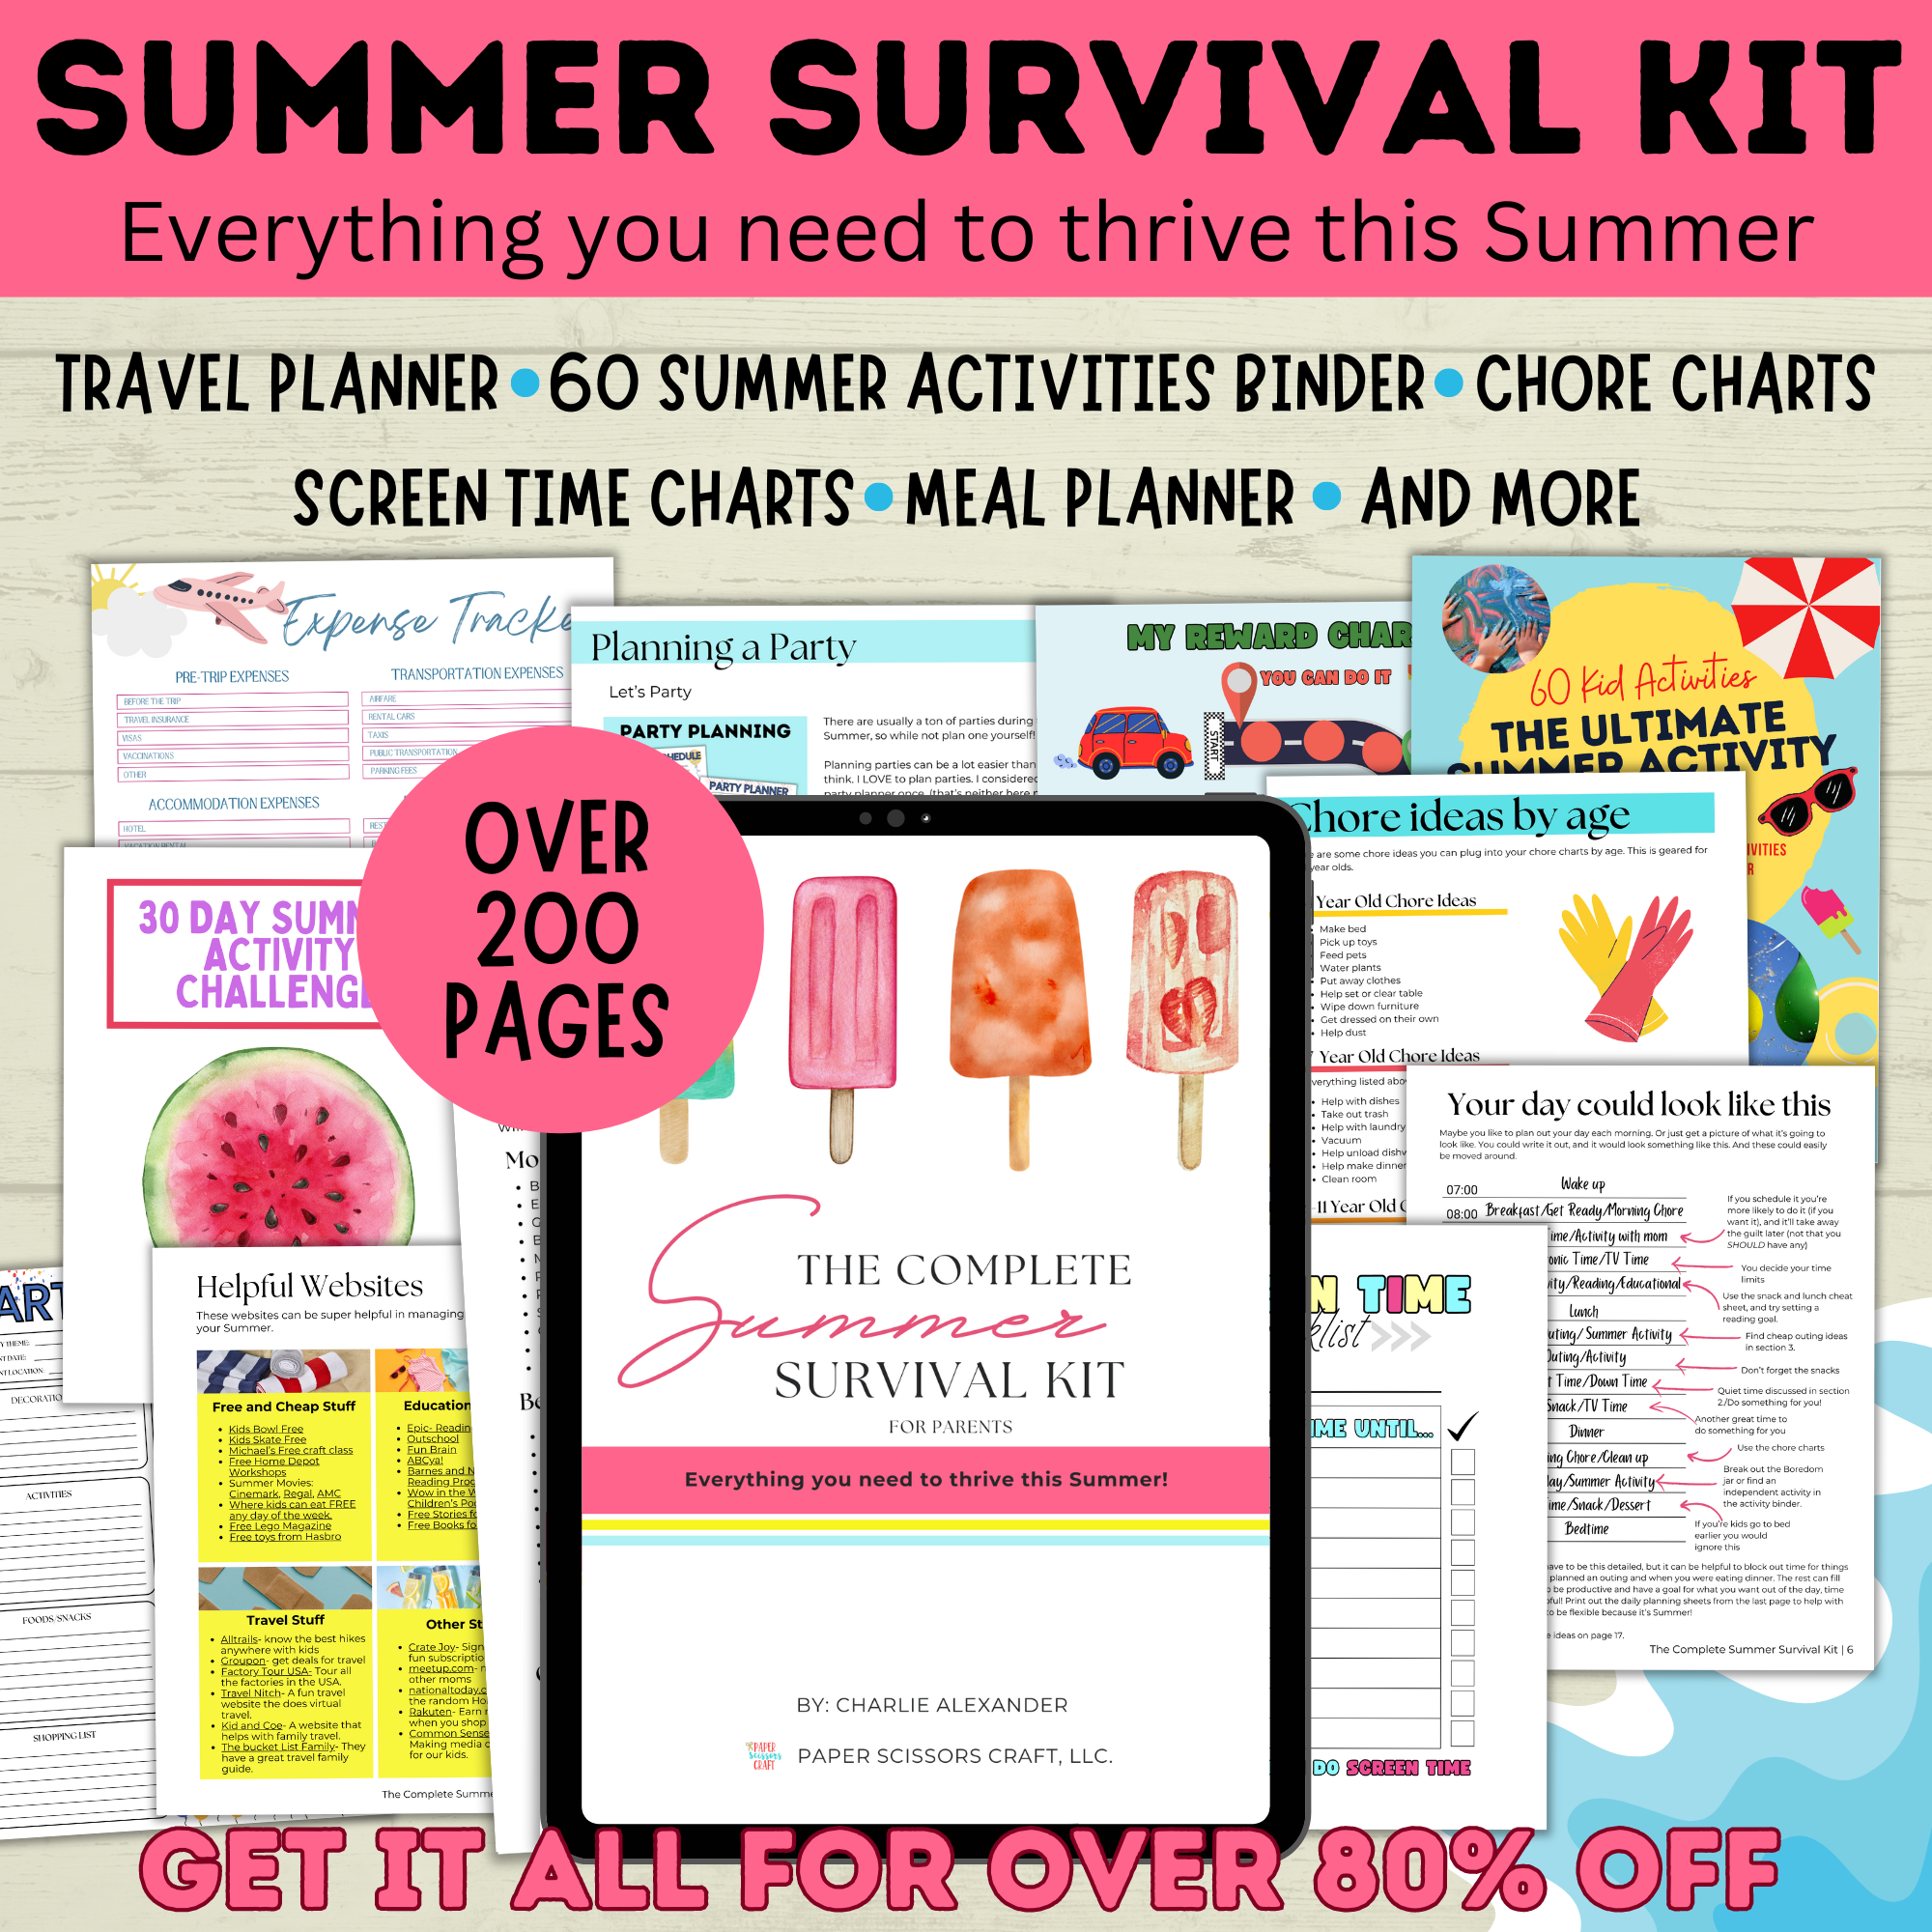 Summer survival kit mockup image.